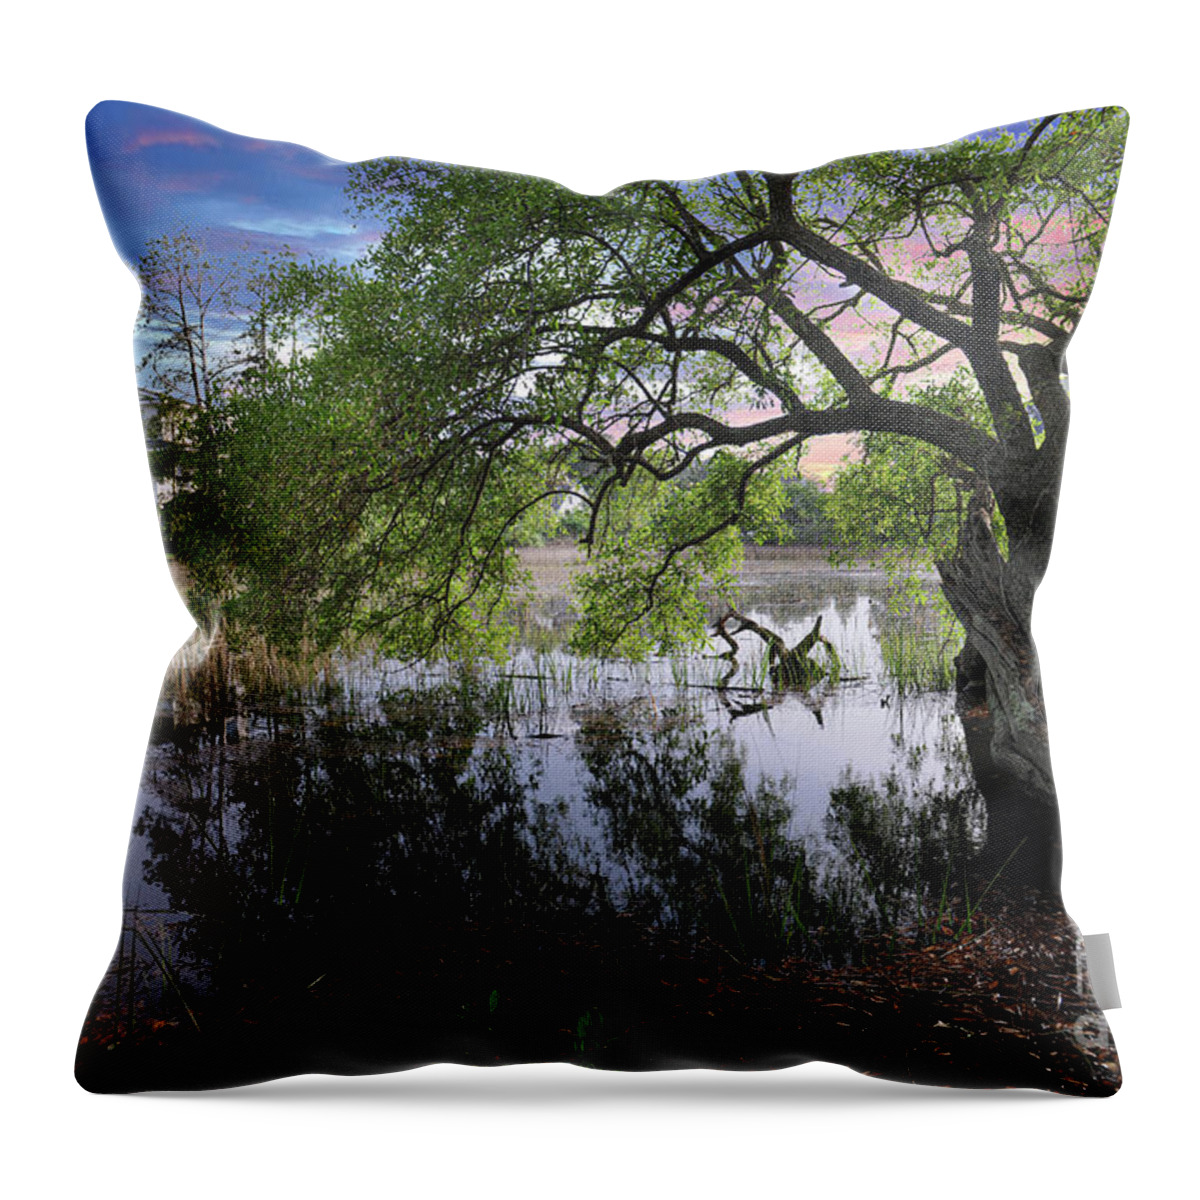 Salt Marsh Throw Pillow featuring the photograph Salt Marsh - Sunset - Live Oak Tree by Dale Powell